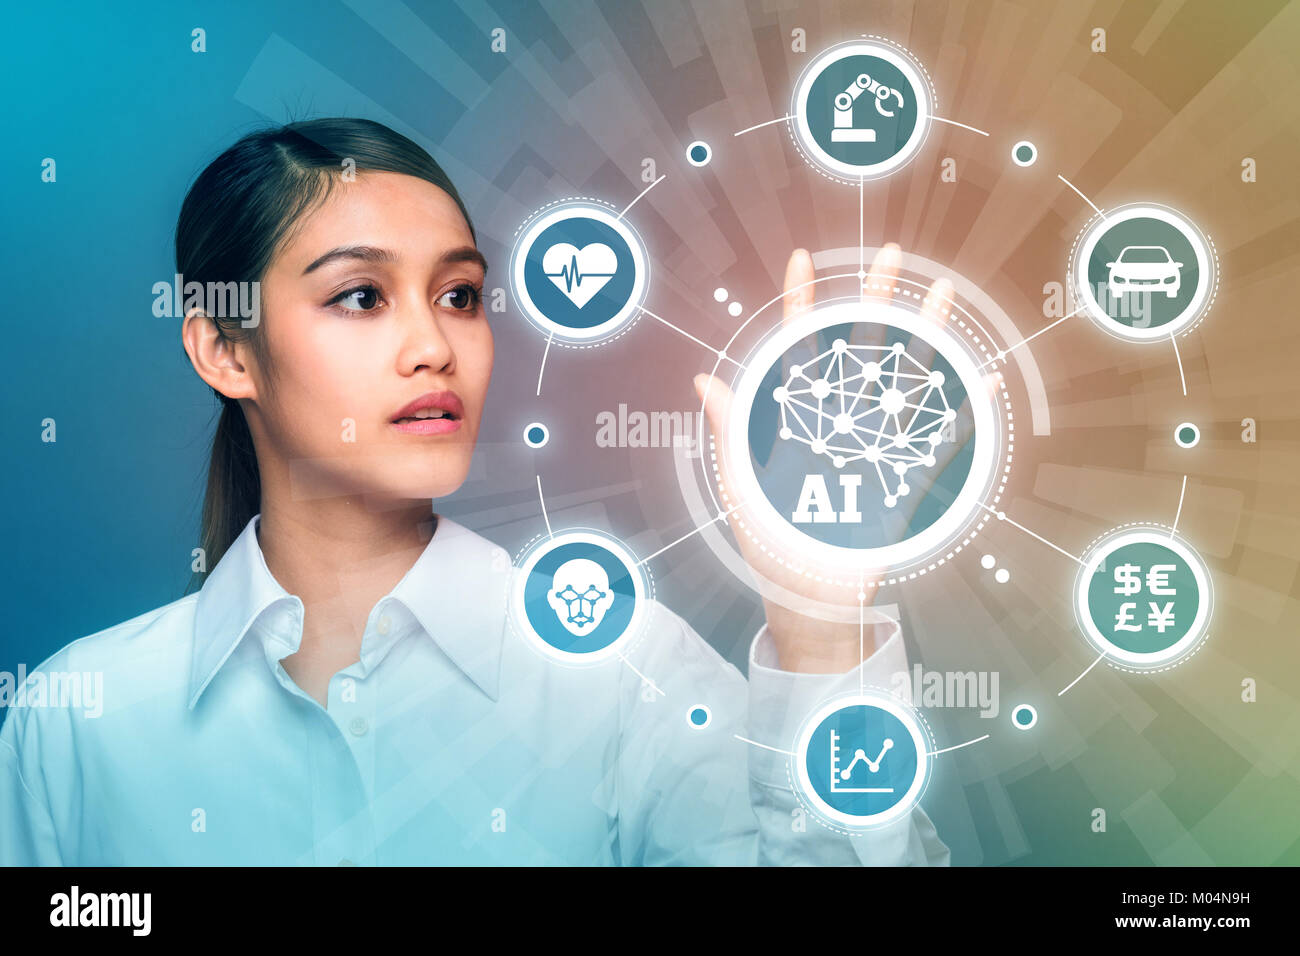 AI(Artificial Intelligence) concept. Stock Photo